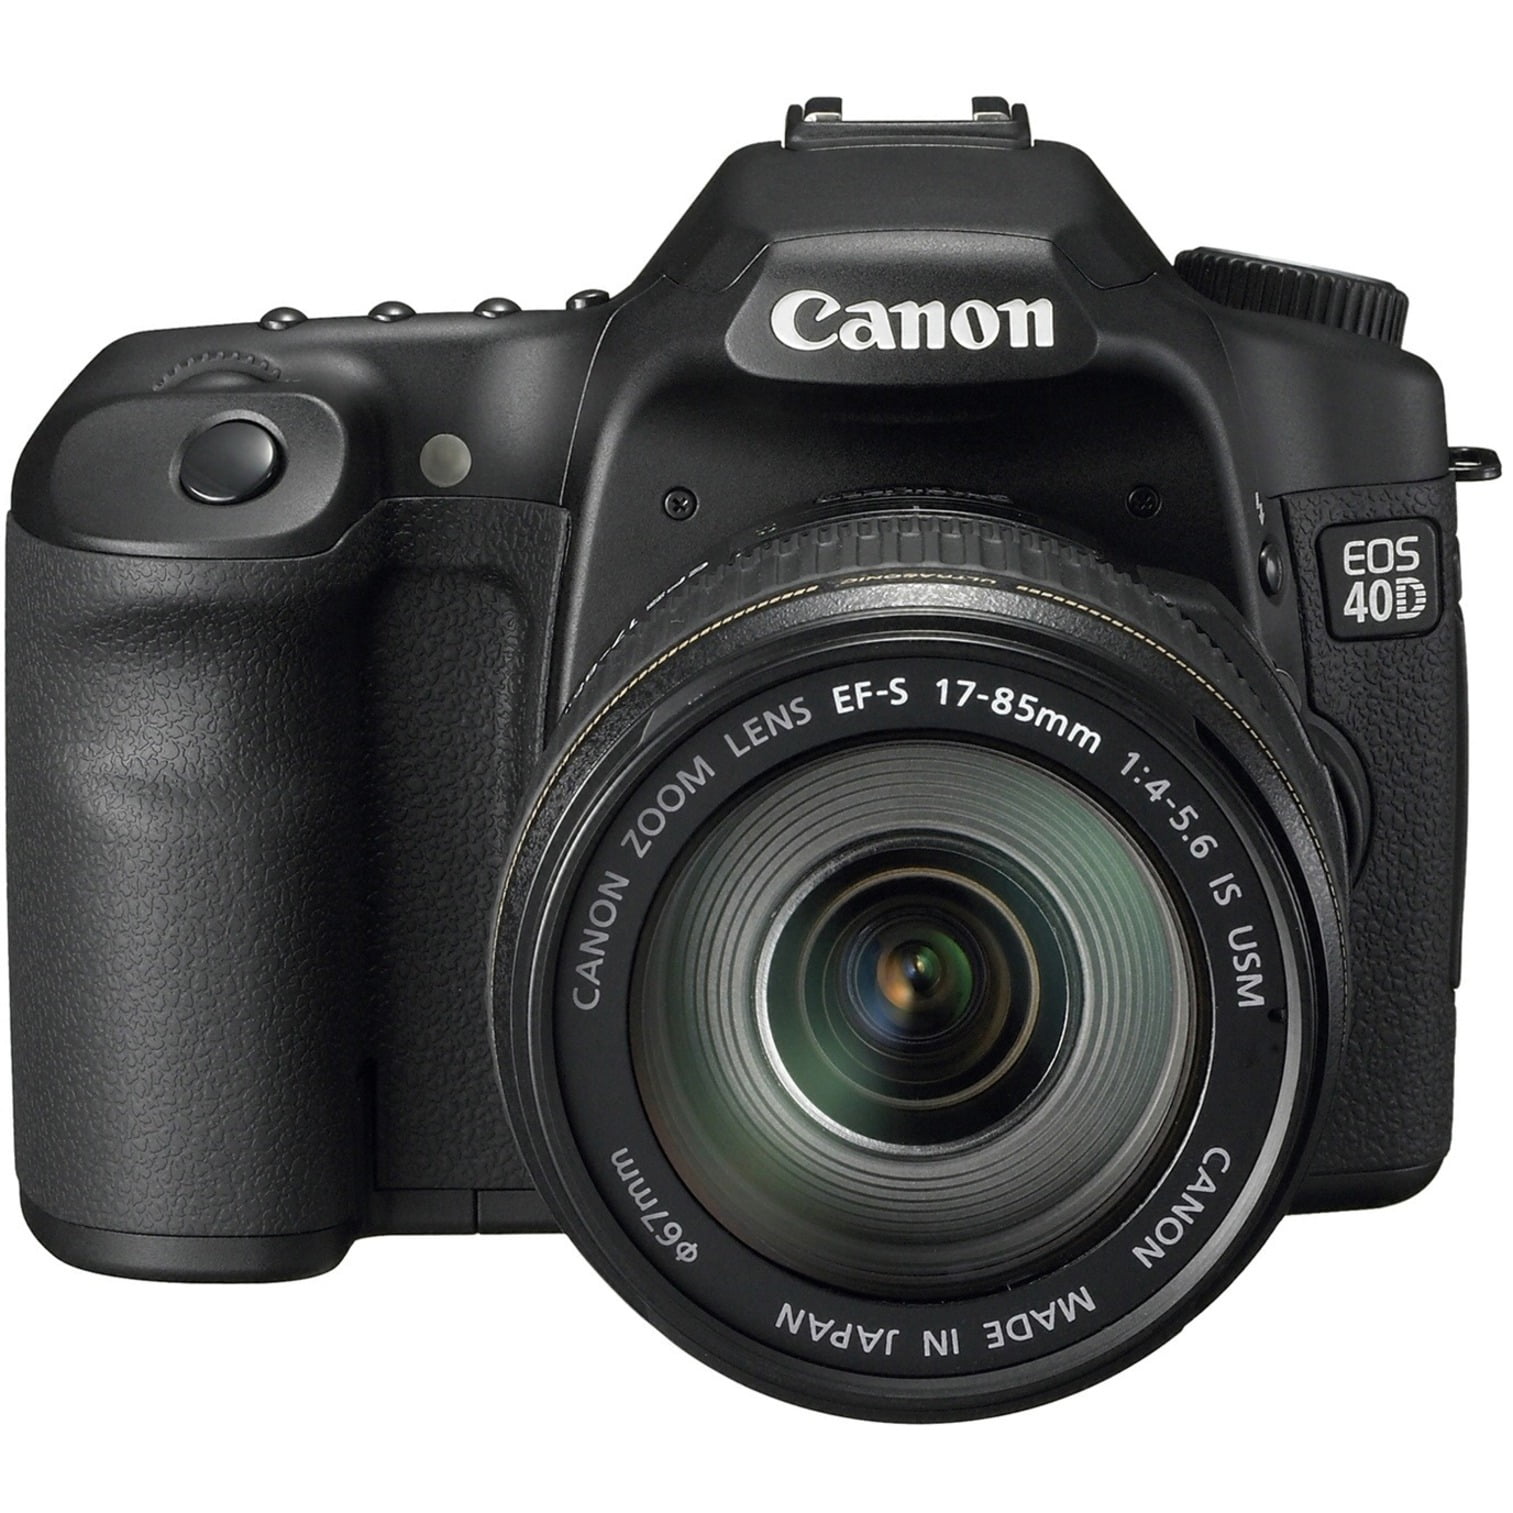 Canon EOS 40D 10.1 Megapixel Digital SLR Camera Body Only